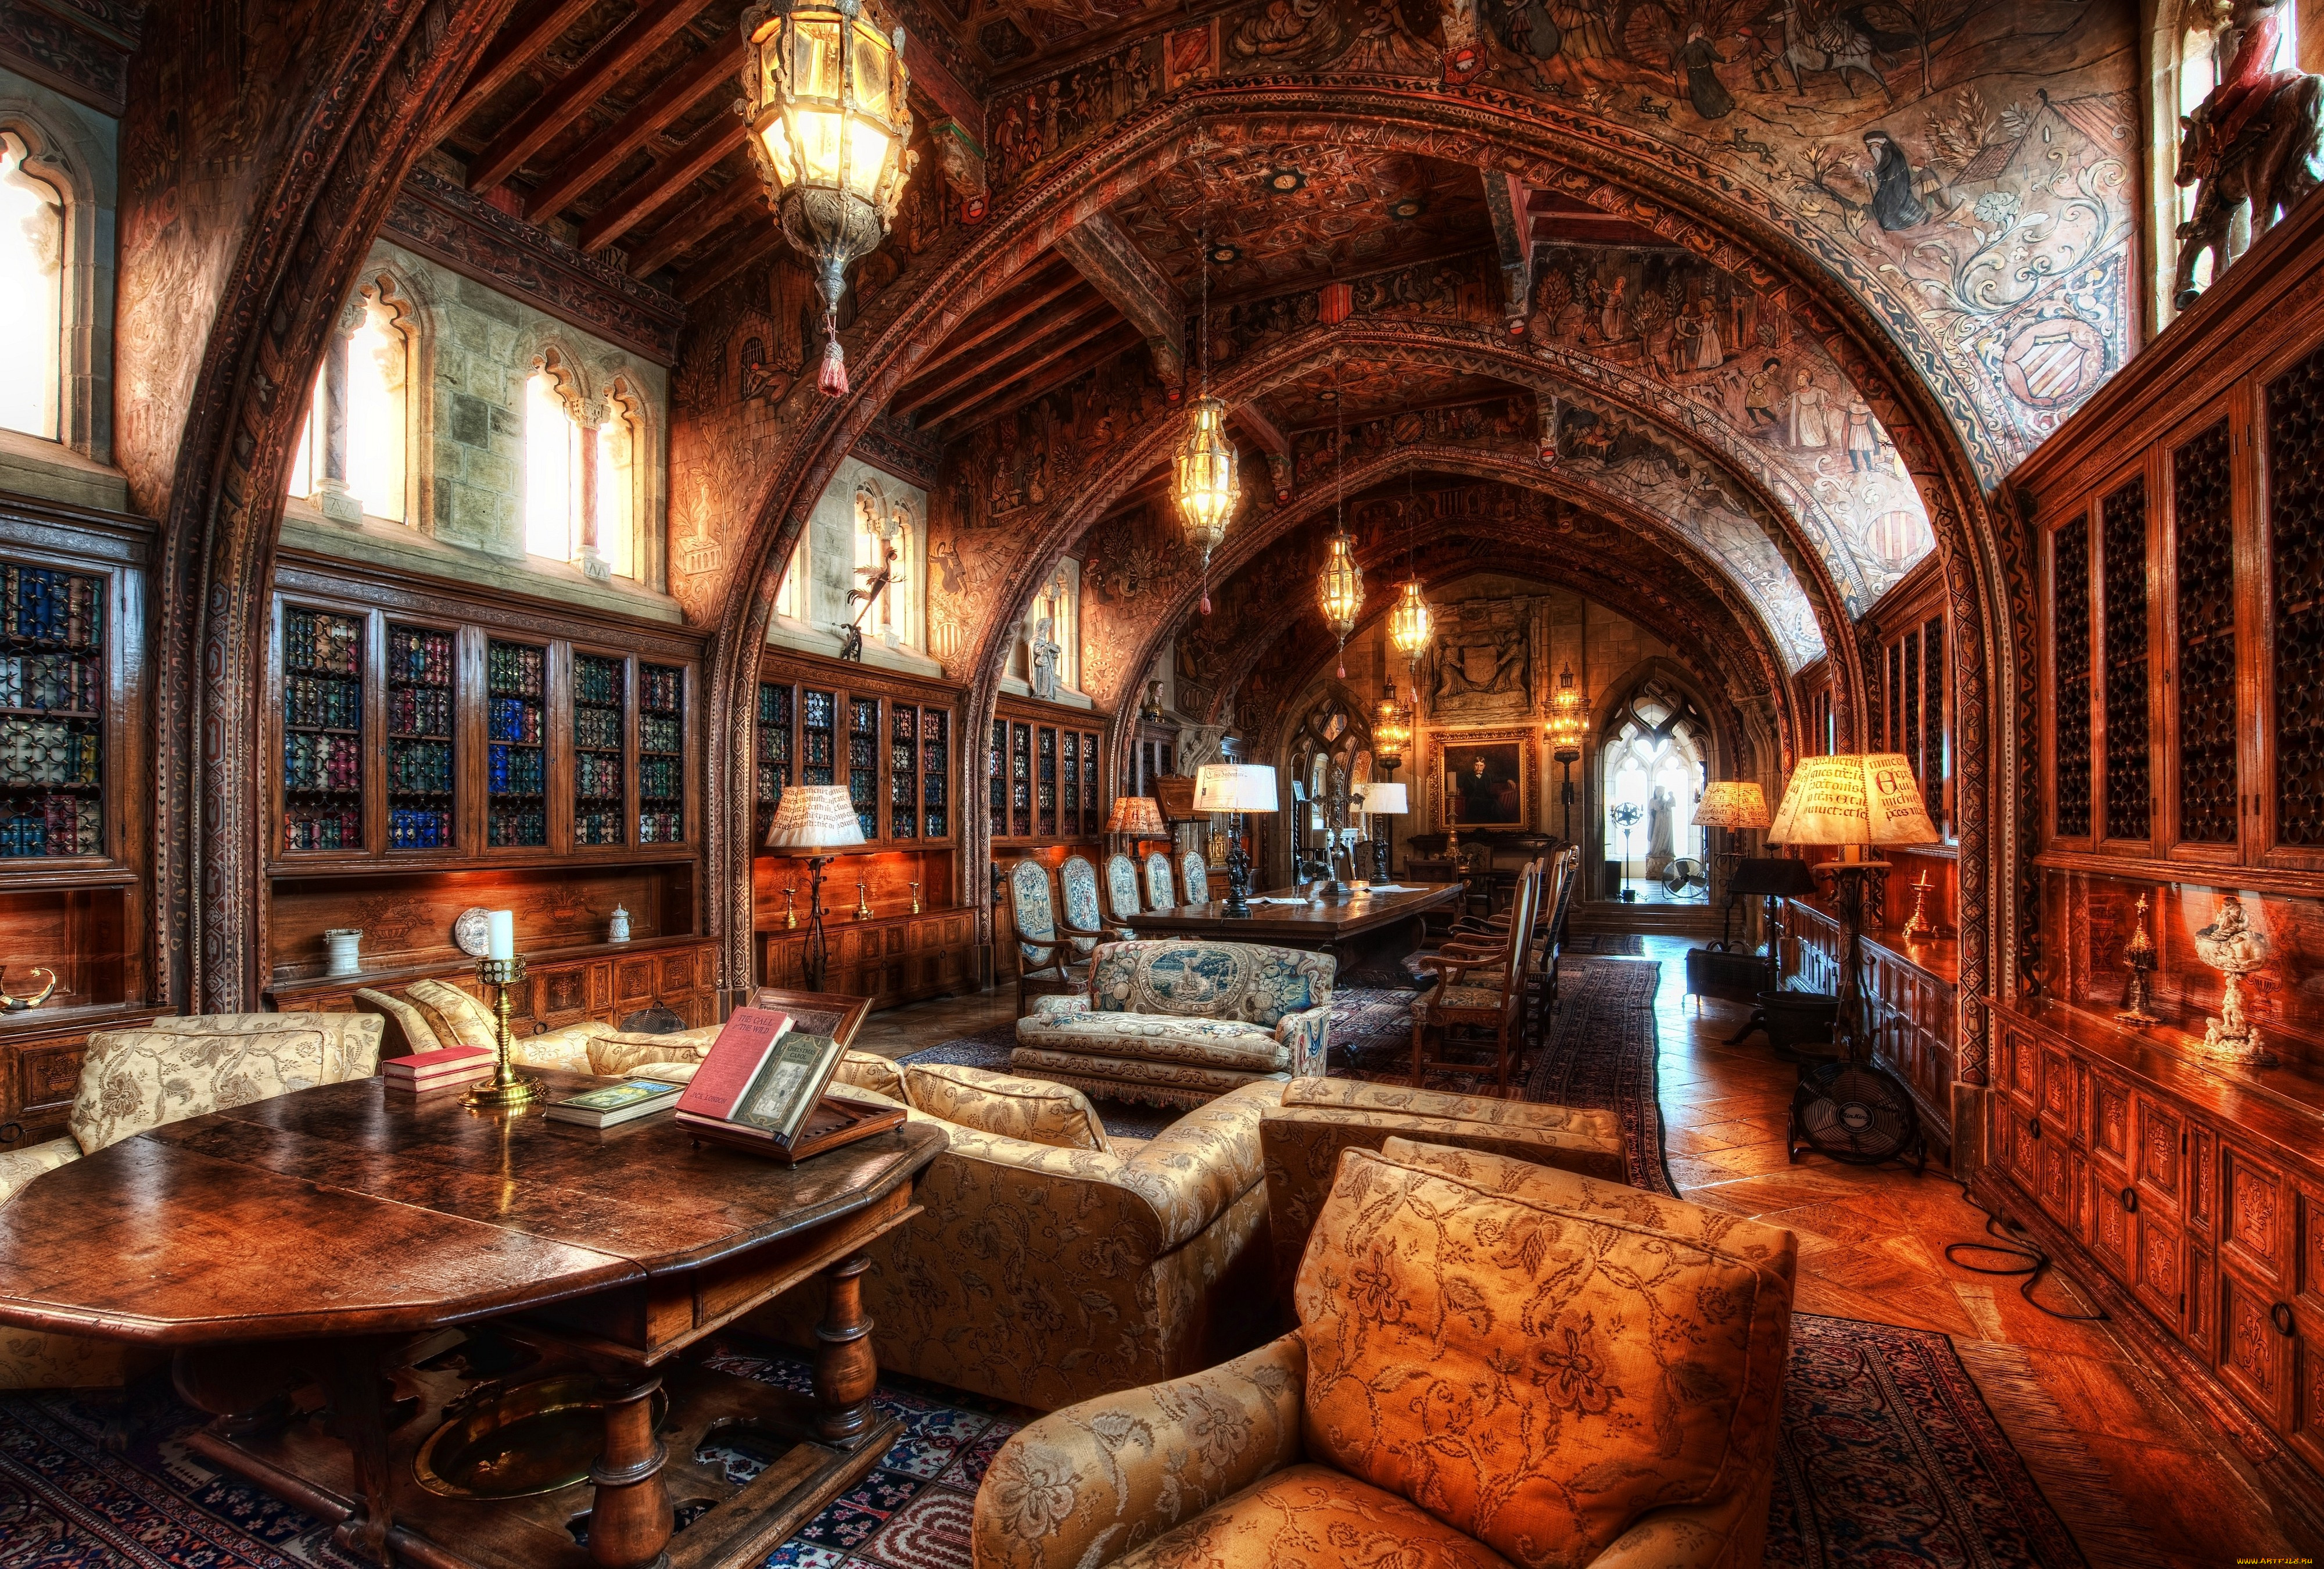 Интерьер литературных произведений. Библиотека Hearst Castle. Хогвартс гостиная Гриффиндора.